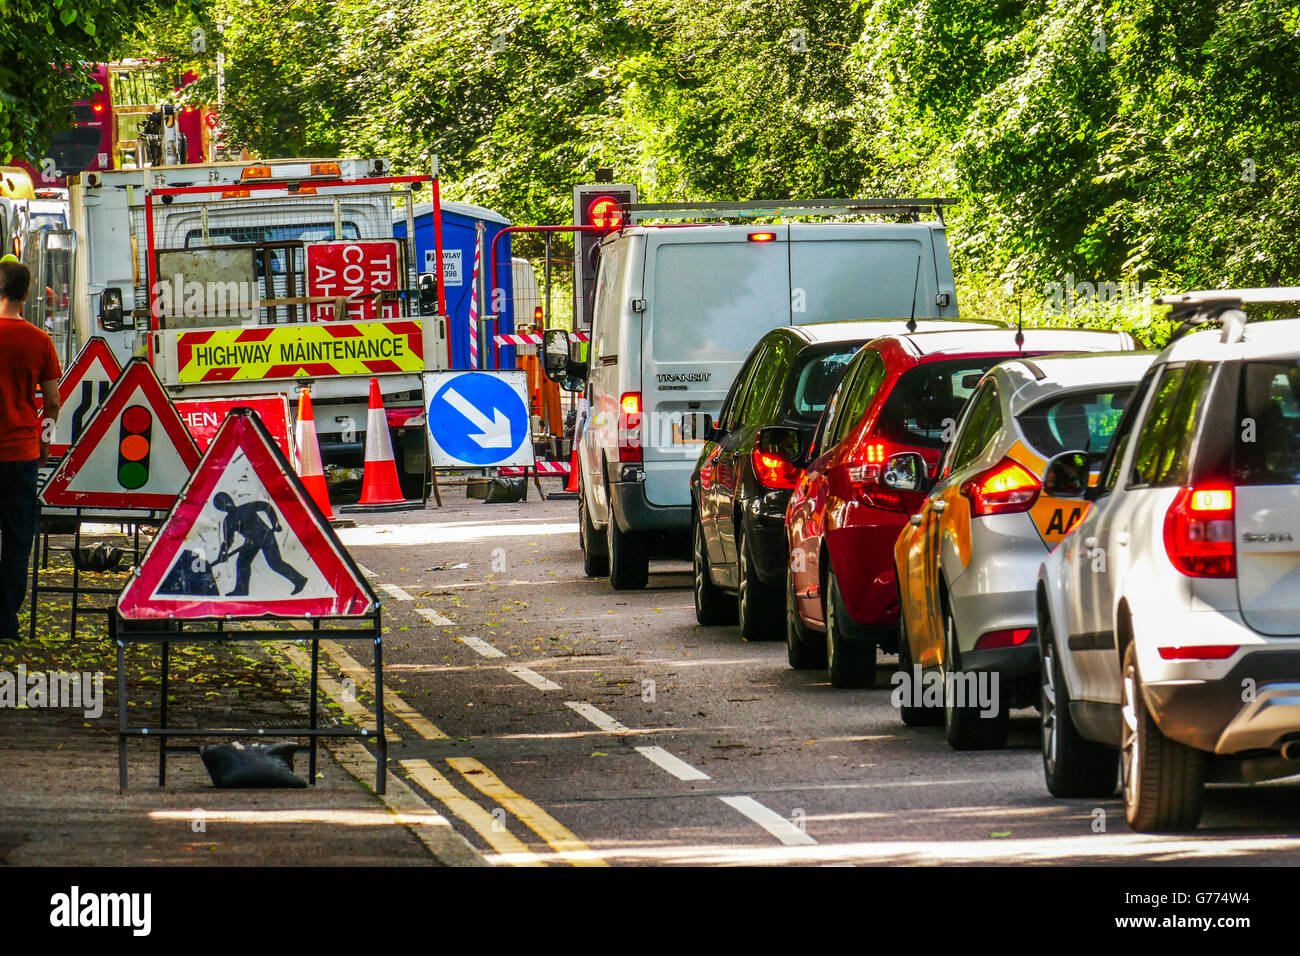 Traffic jam due to temporary traffic lights at roadworks Blake Hall Road, Wanstead, London E11 Stock Photo